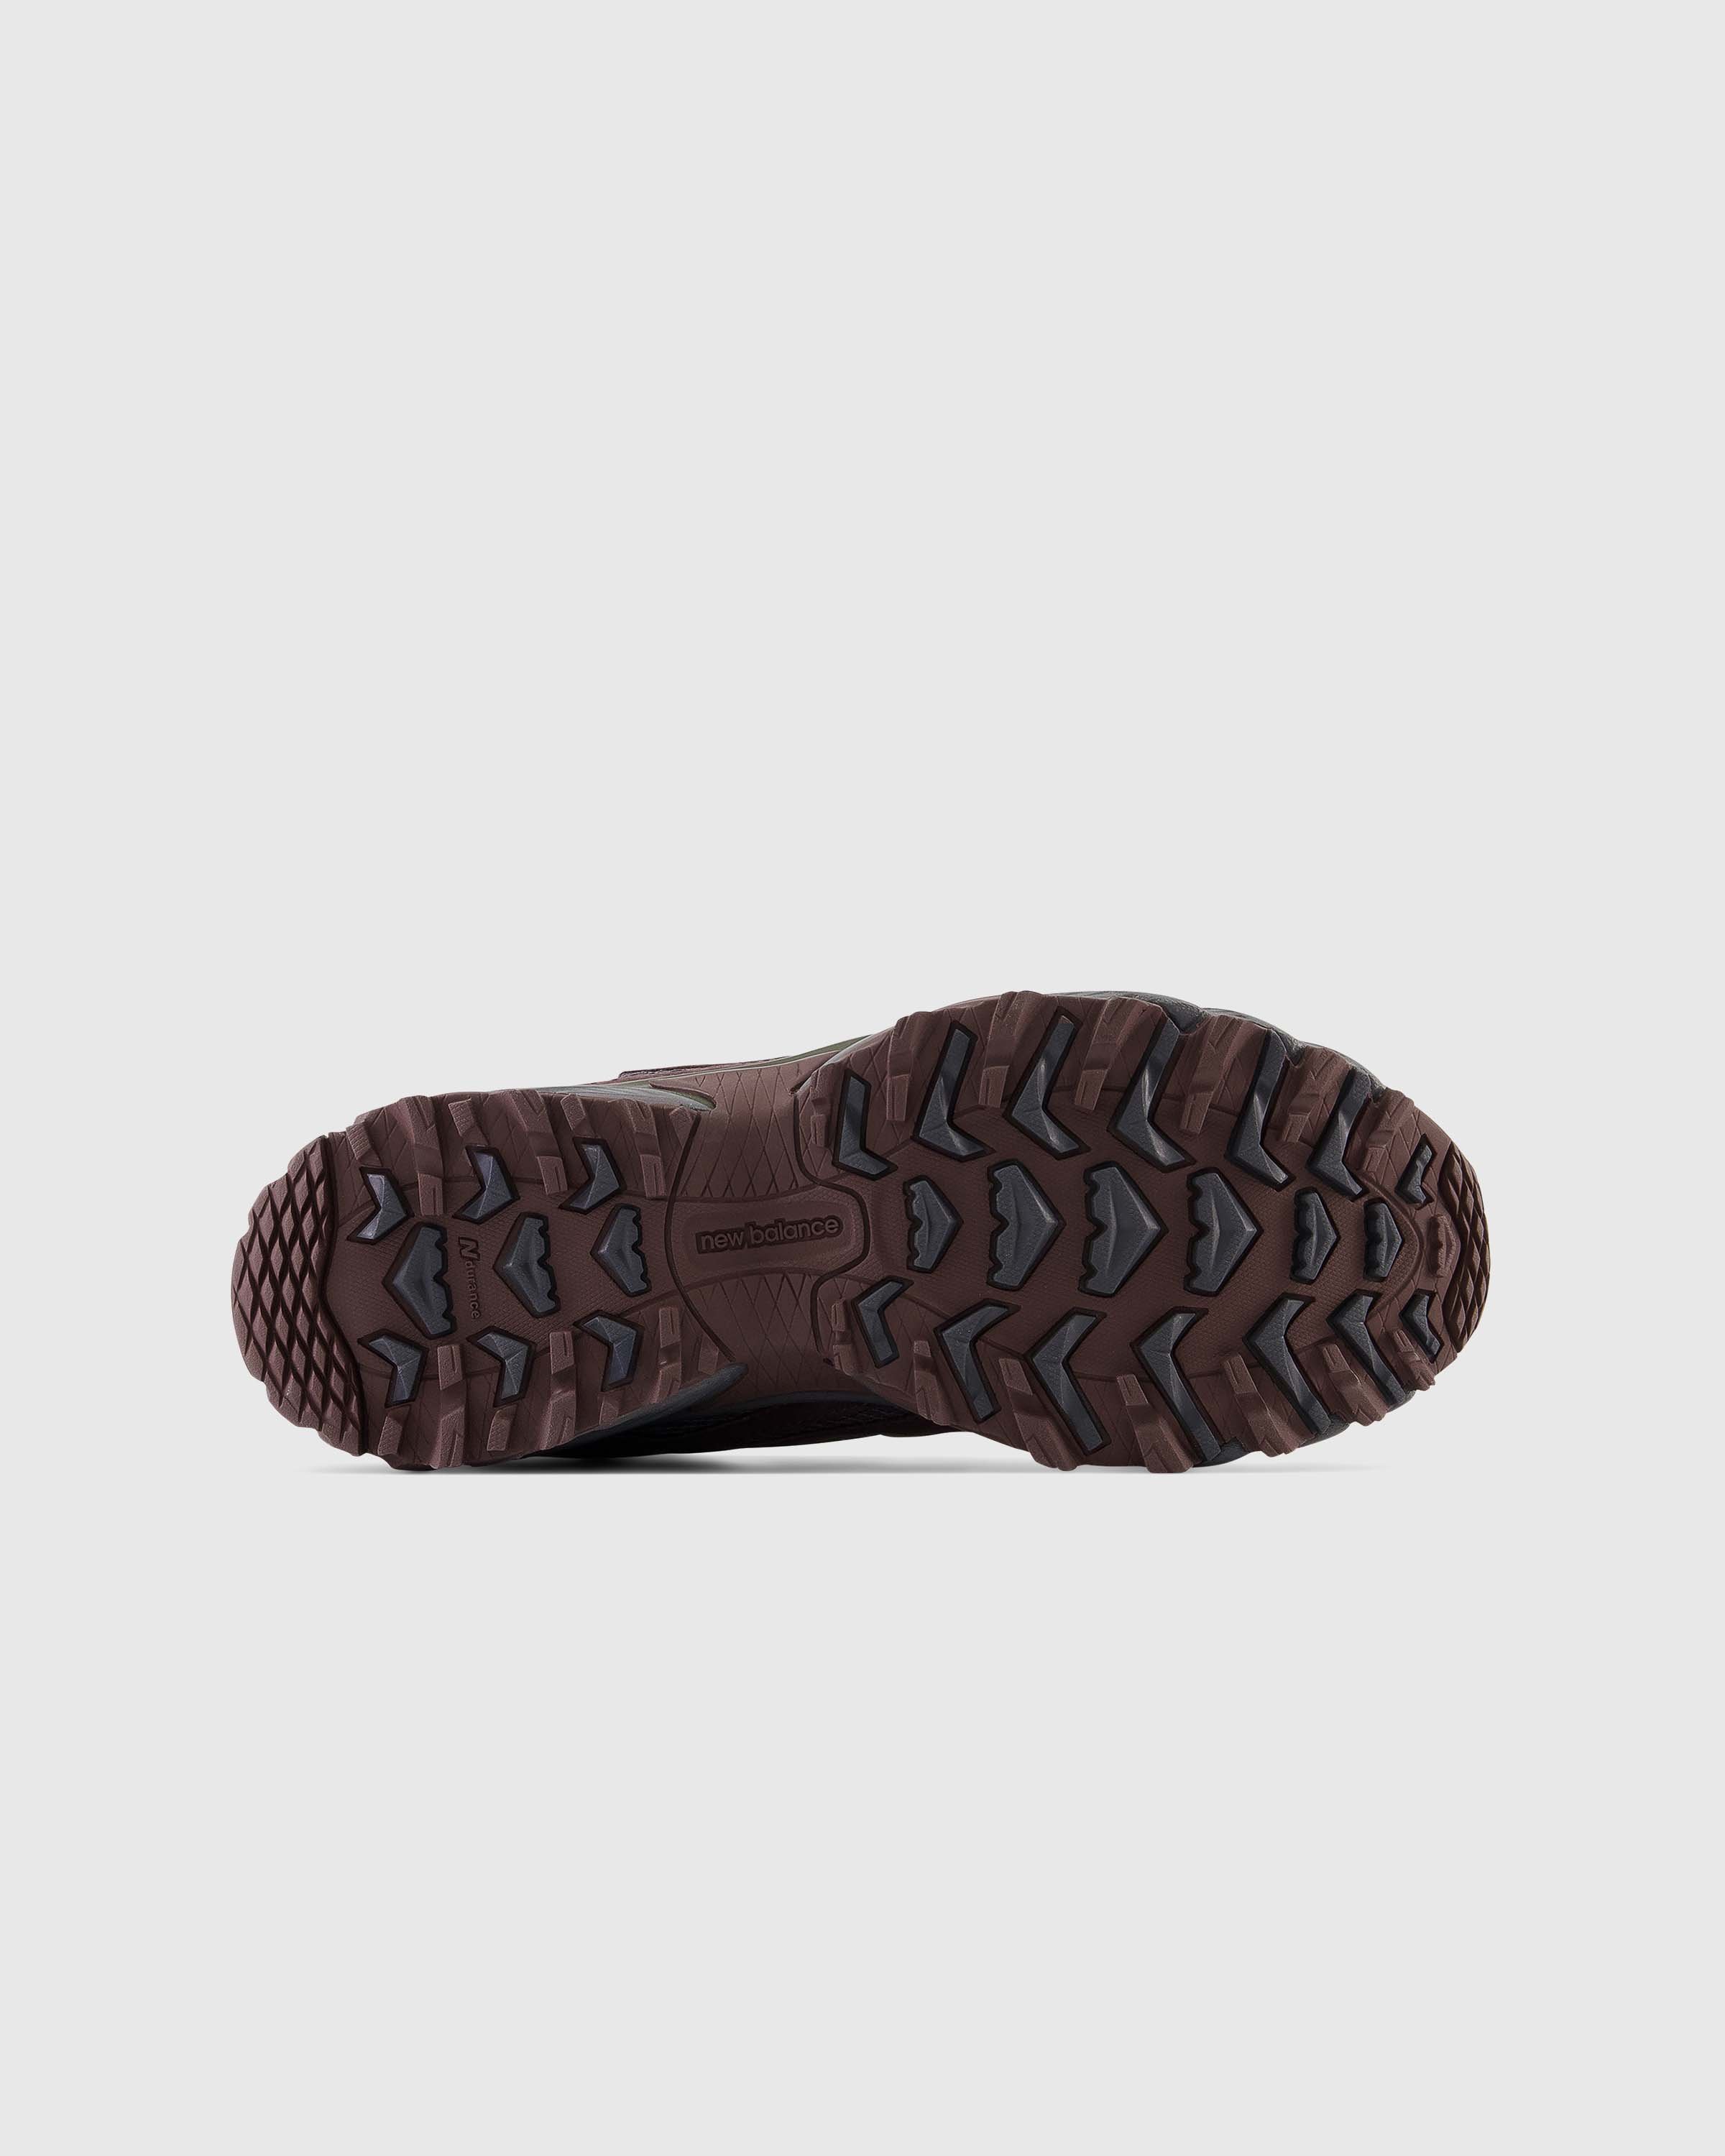 New Balance - 610v1 Truffle - Footwear - Brown - Image 5